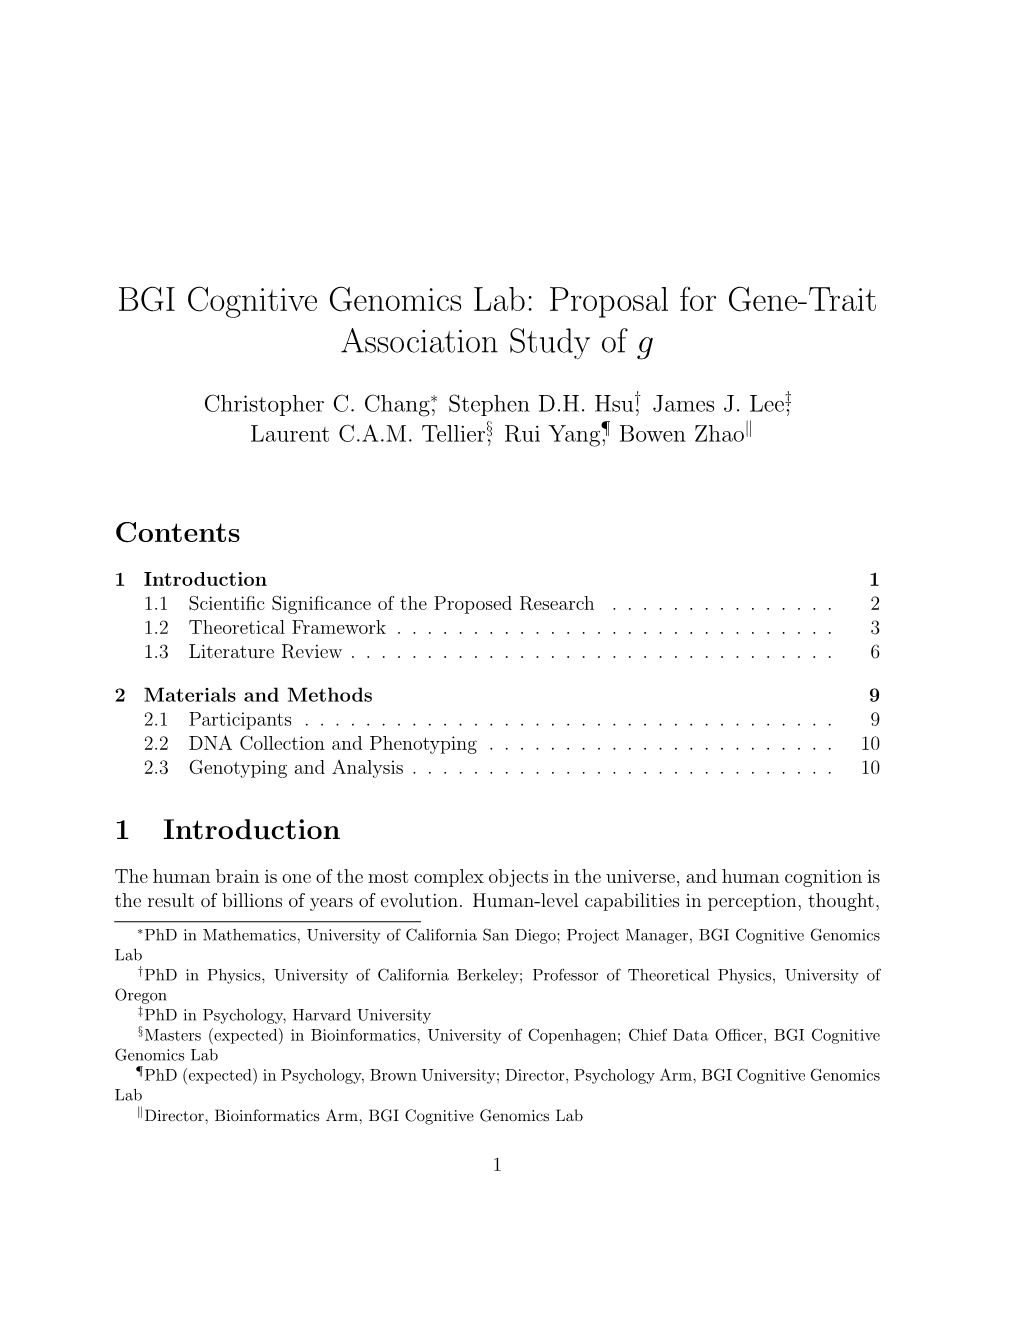 BGI Cognitive Genomics Lab: Proposal for Gene-Trait Association Study of G